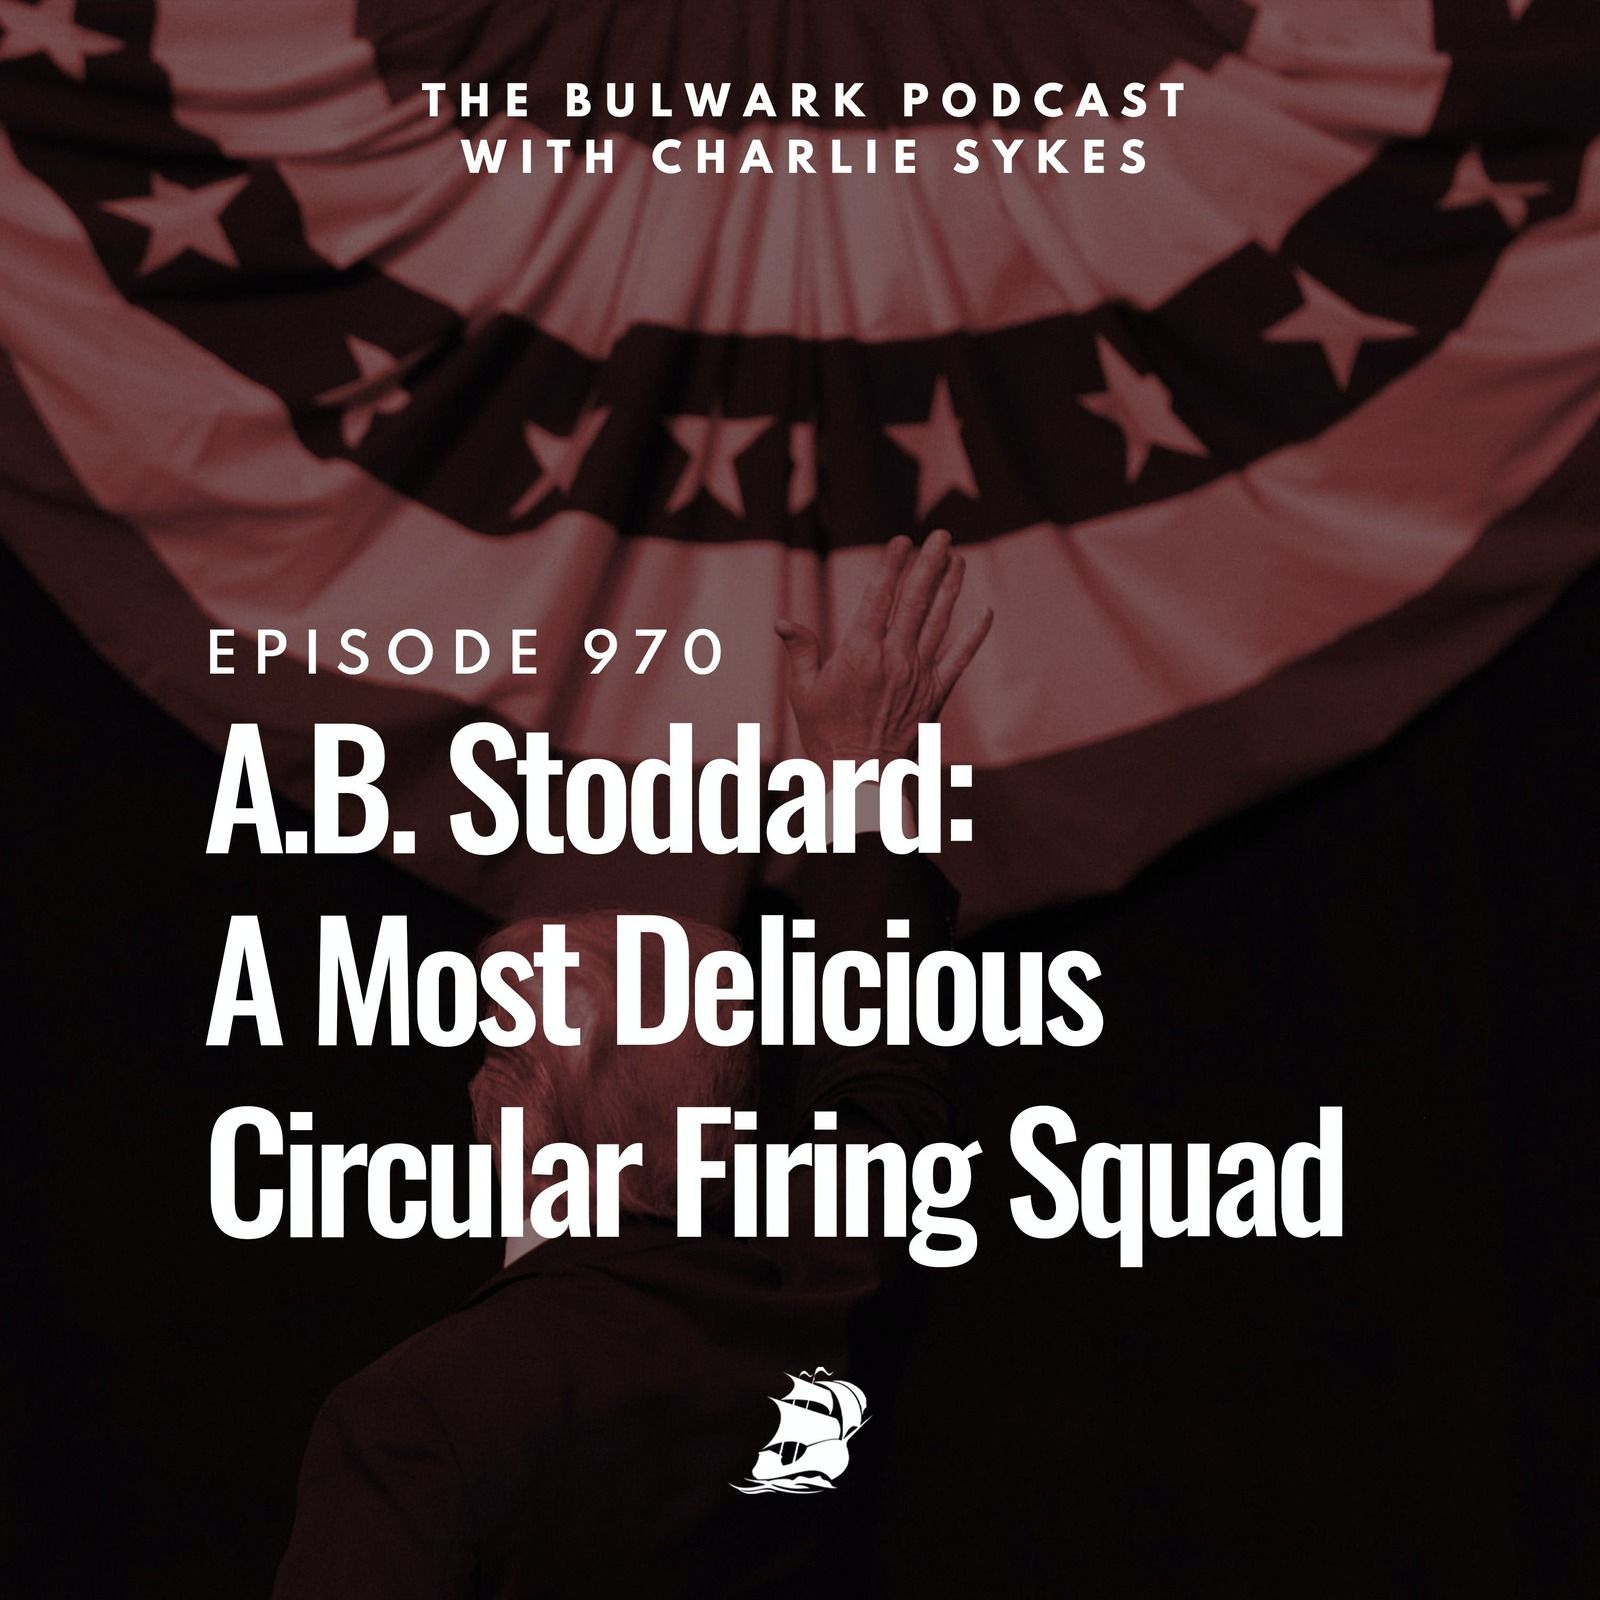 A.B. Stoddard: A Most Delicious Circular Firing Squad